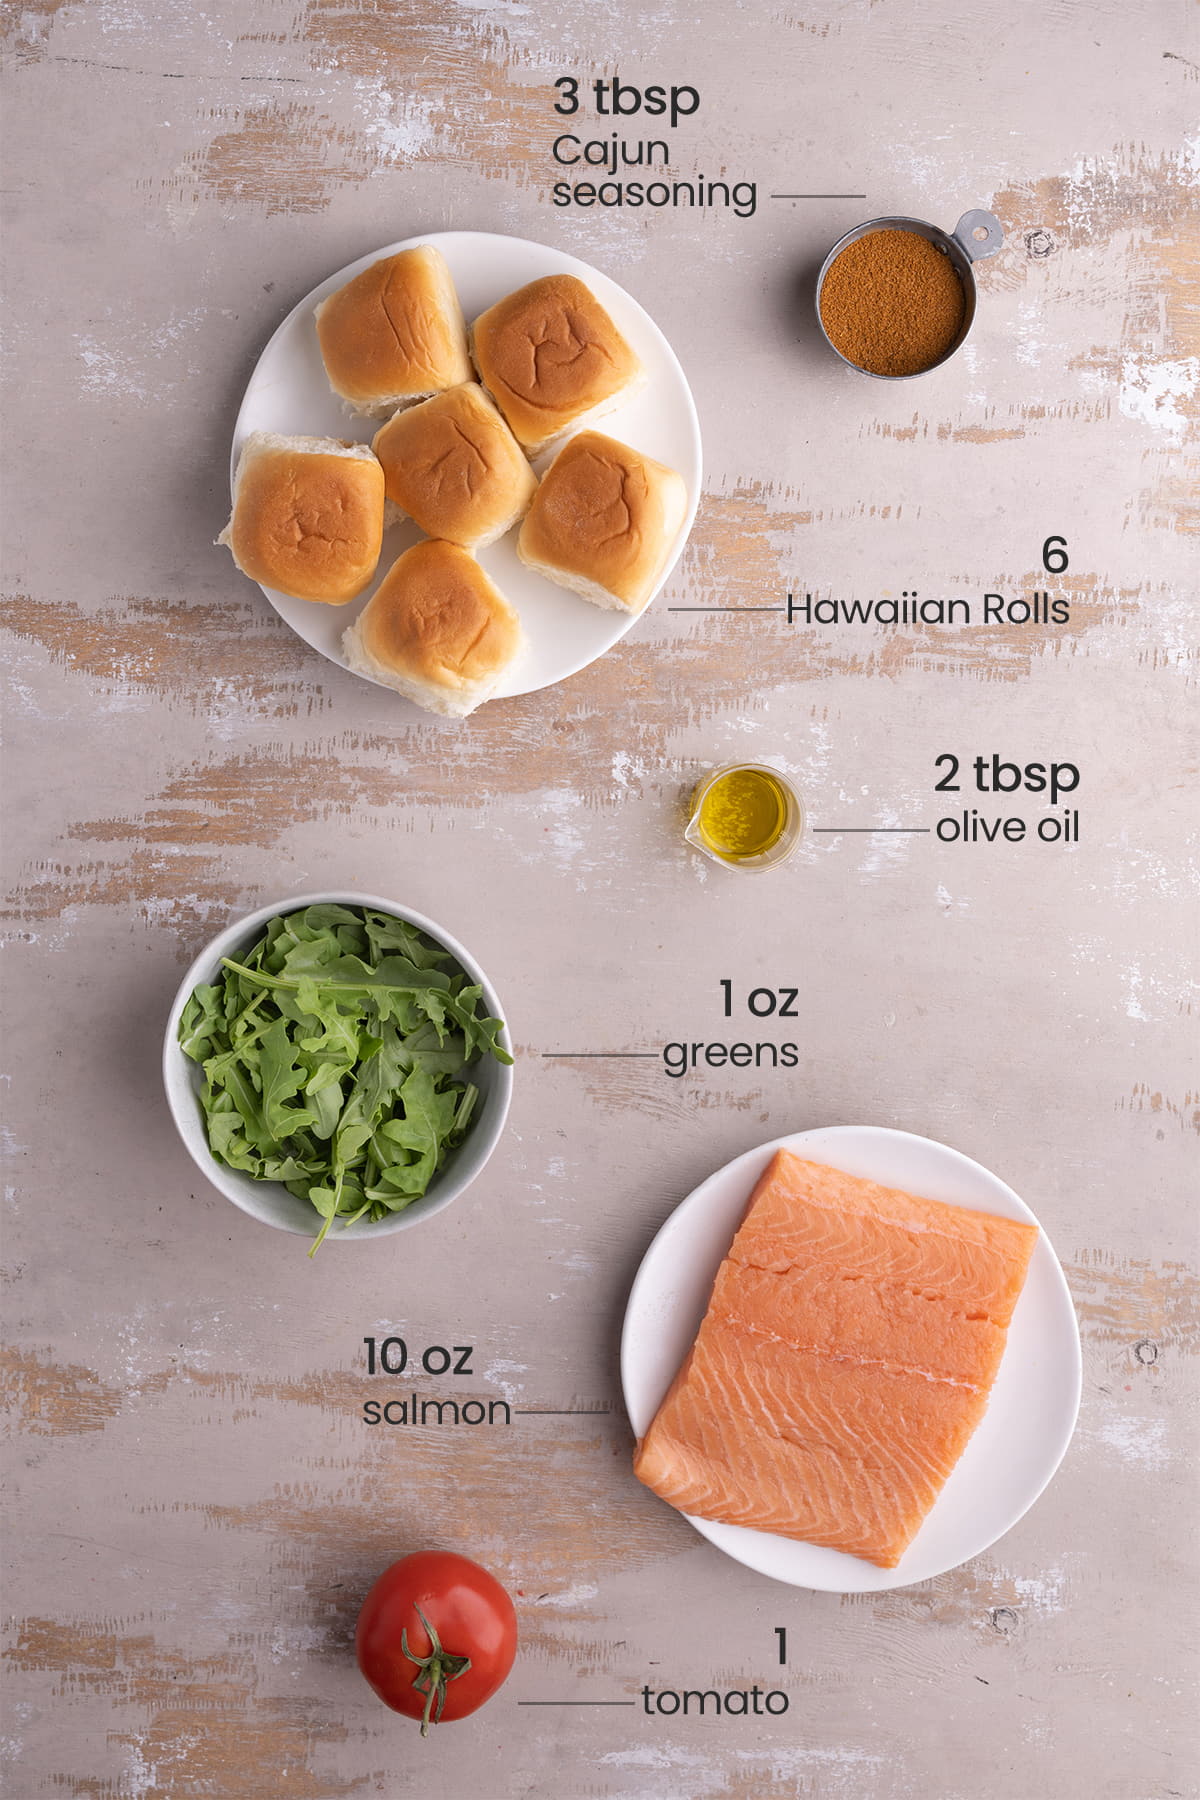 ingredients for salmon sliders - Cajun seasoning, Hawaiian rolls, olive oil, greens, salmon, tomato